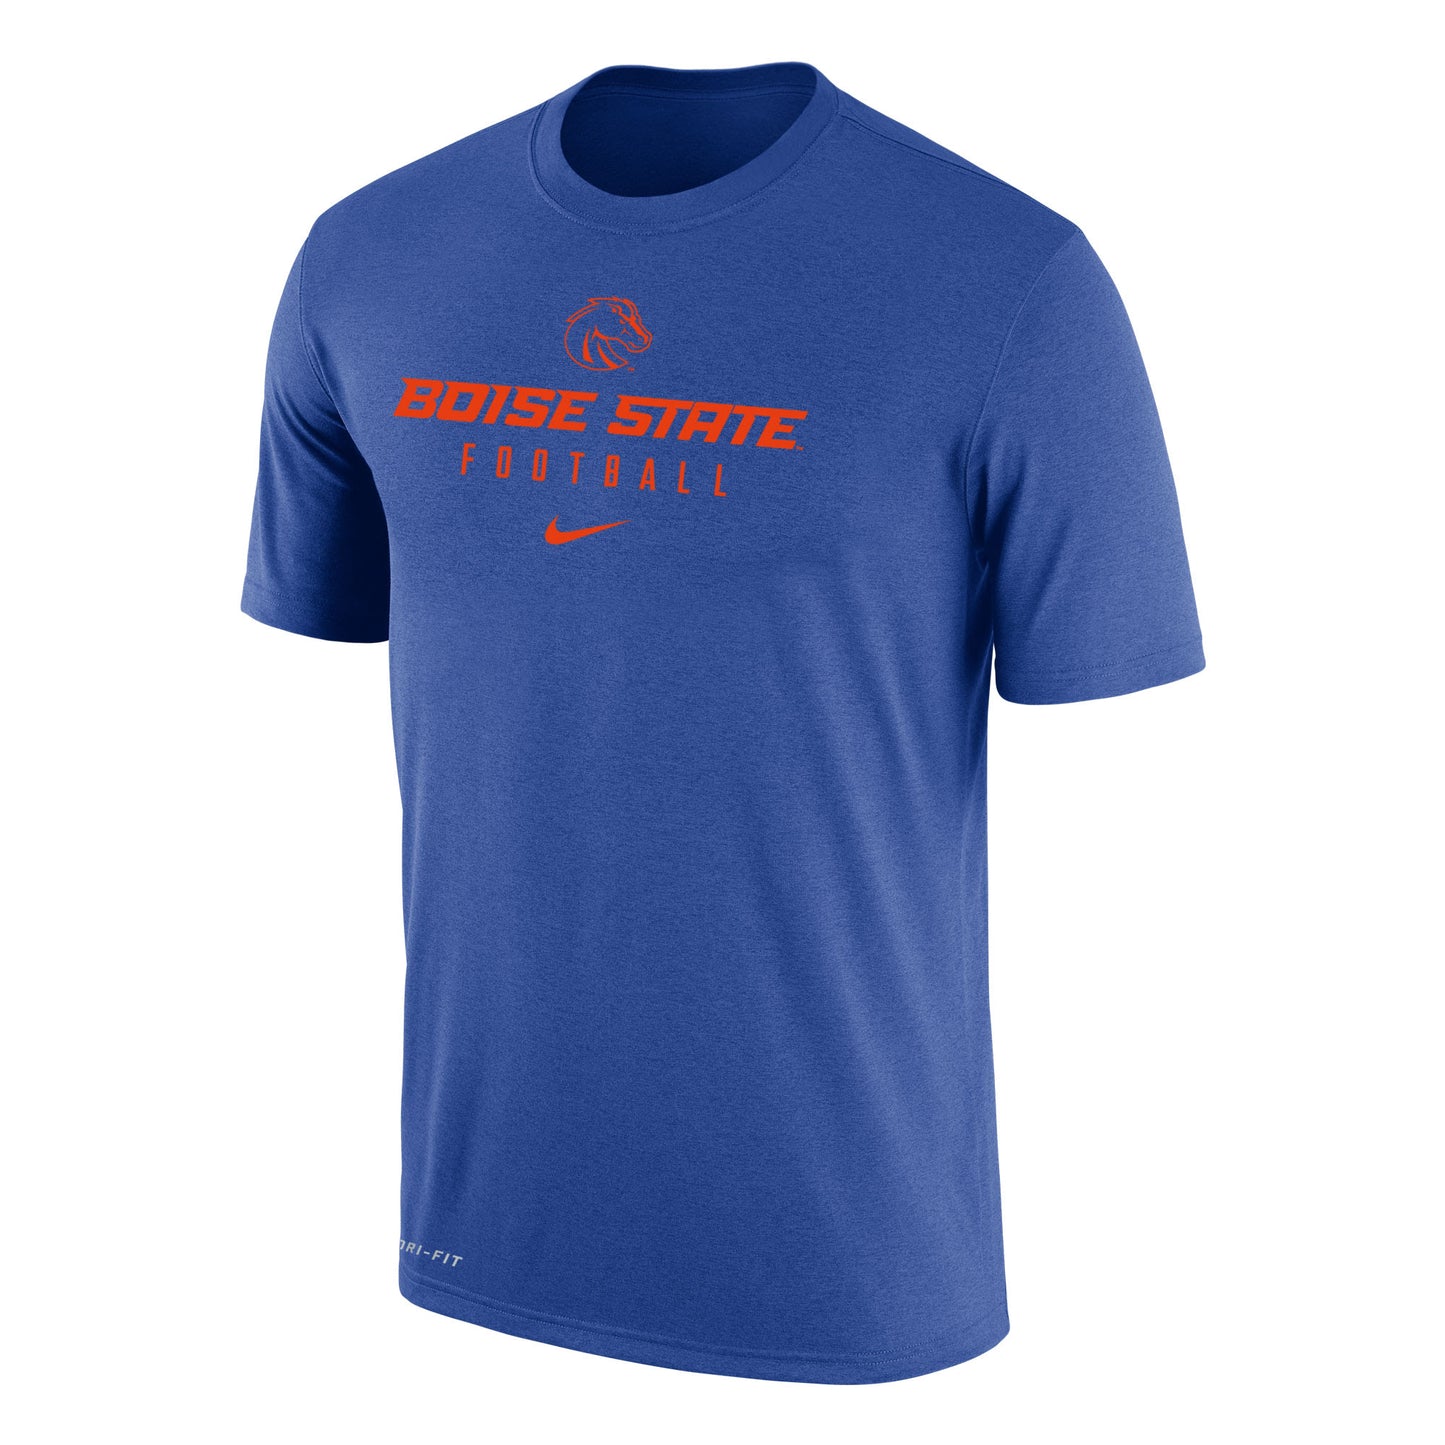 Boise State Broncos Nike Men's "Football" Dri-Fit Cotton T-Shirt (Blue)